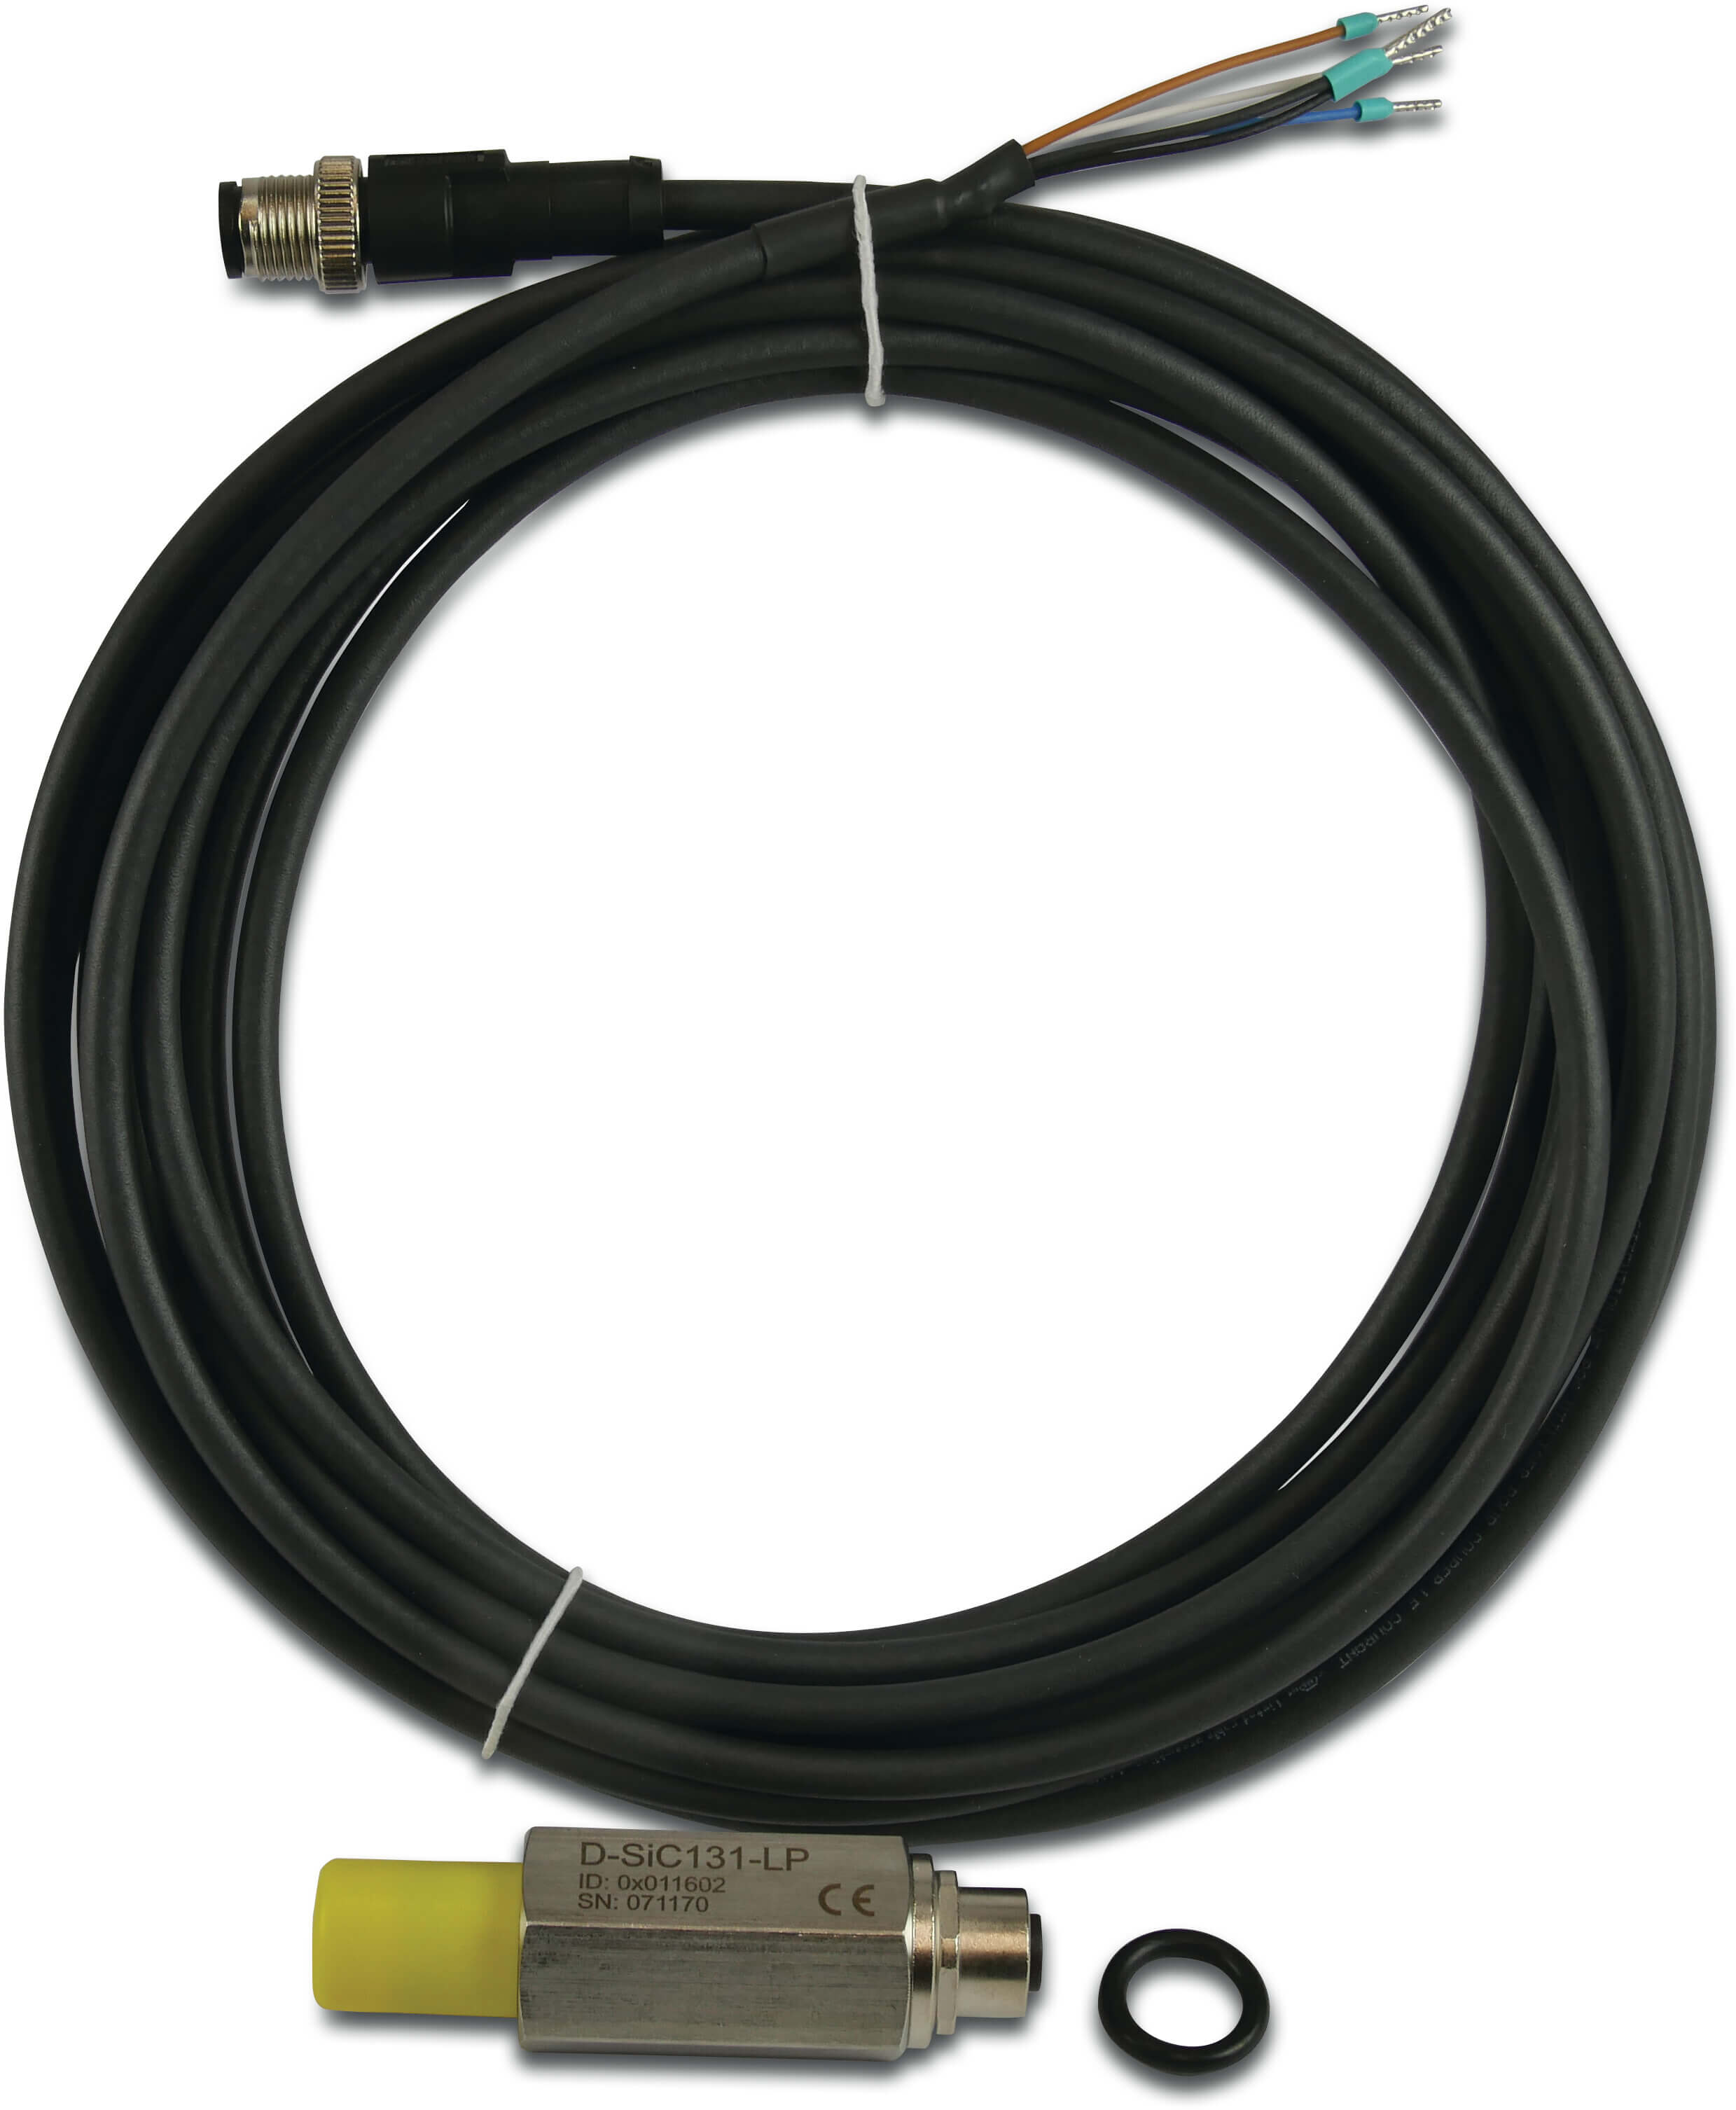 VGE Pro Digital UV sensor + 5 meter cable stainless steel